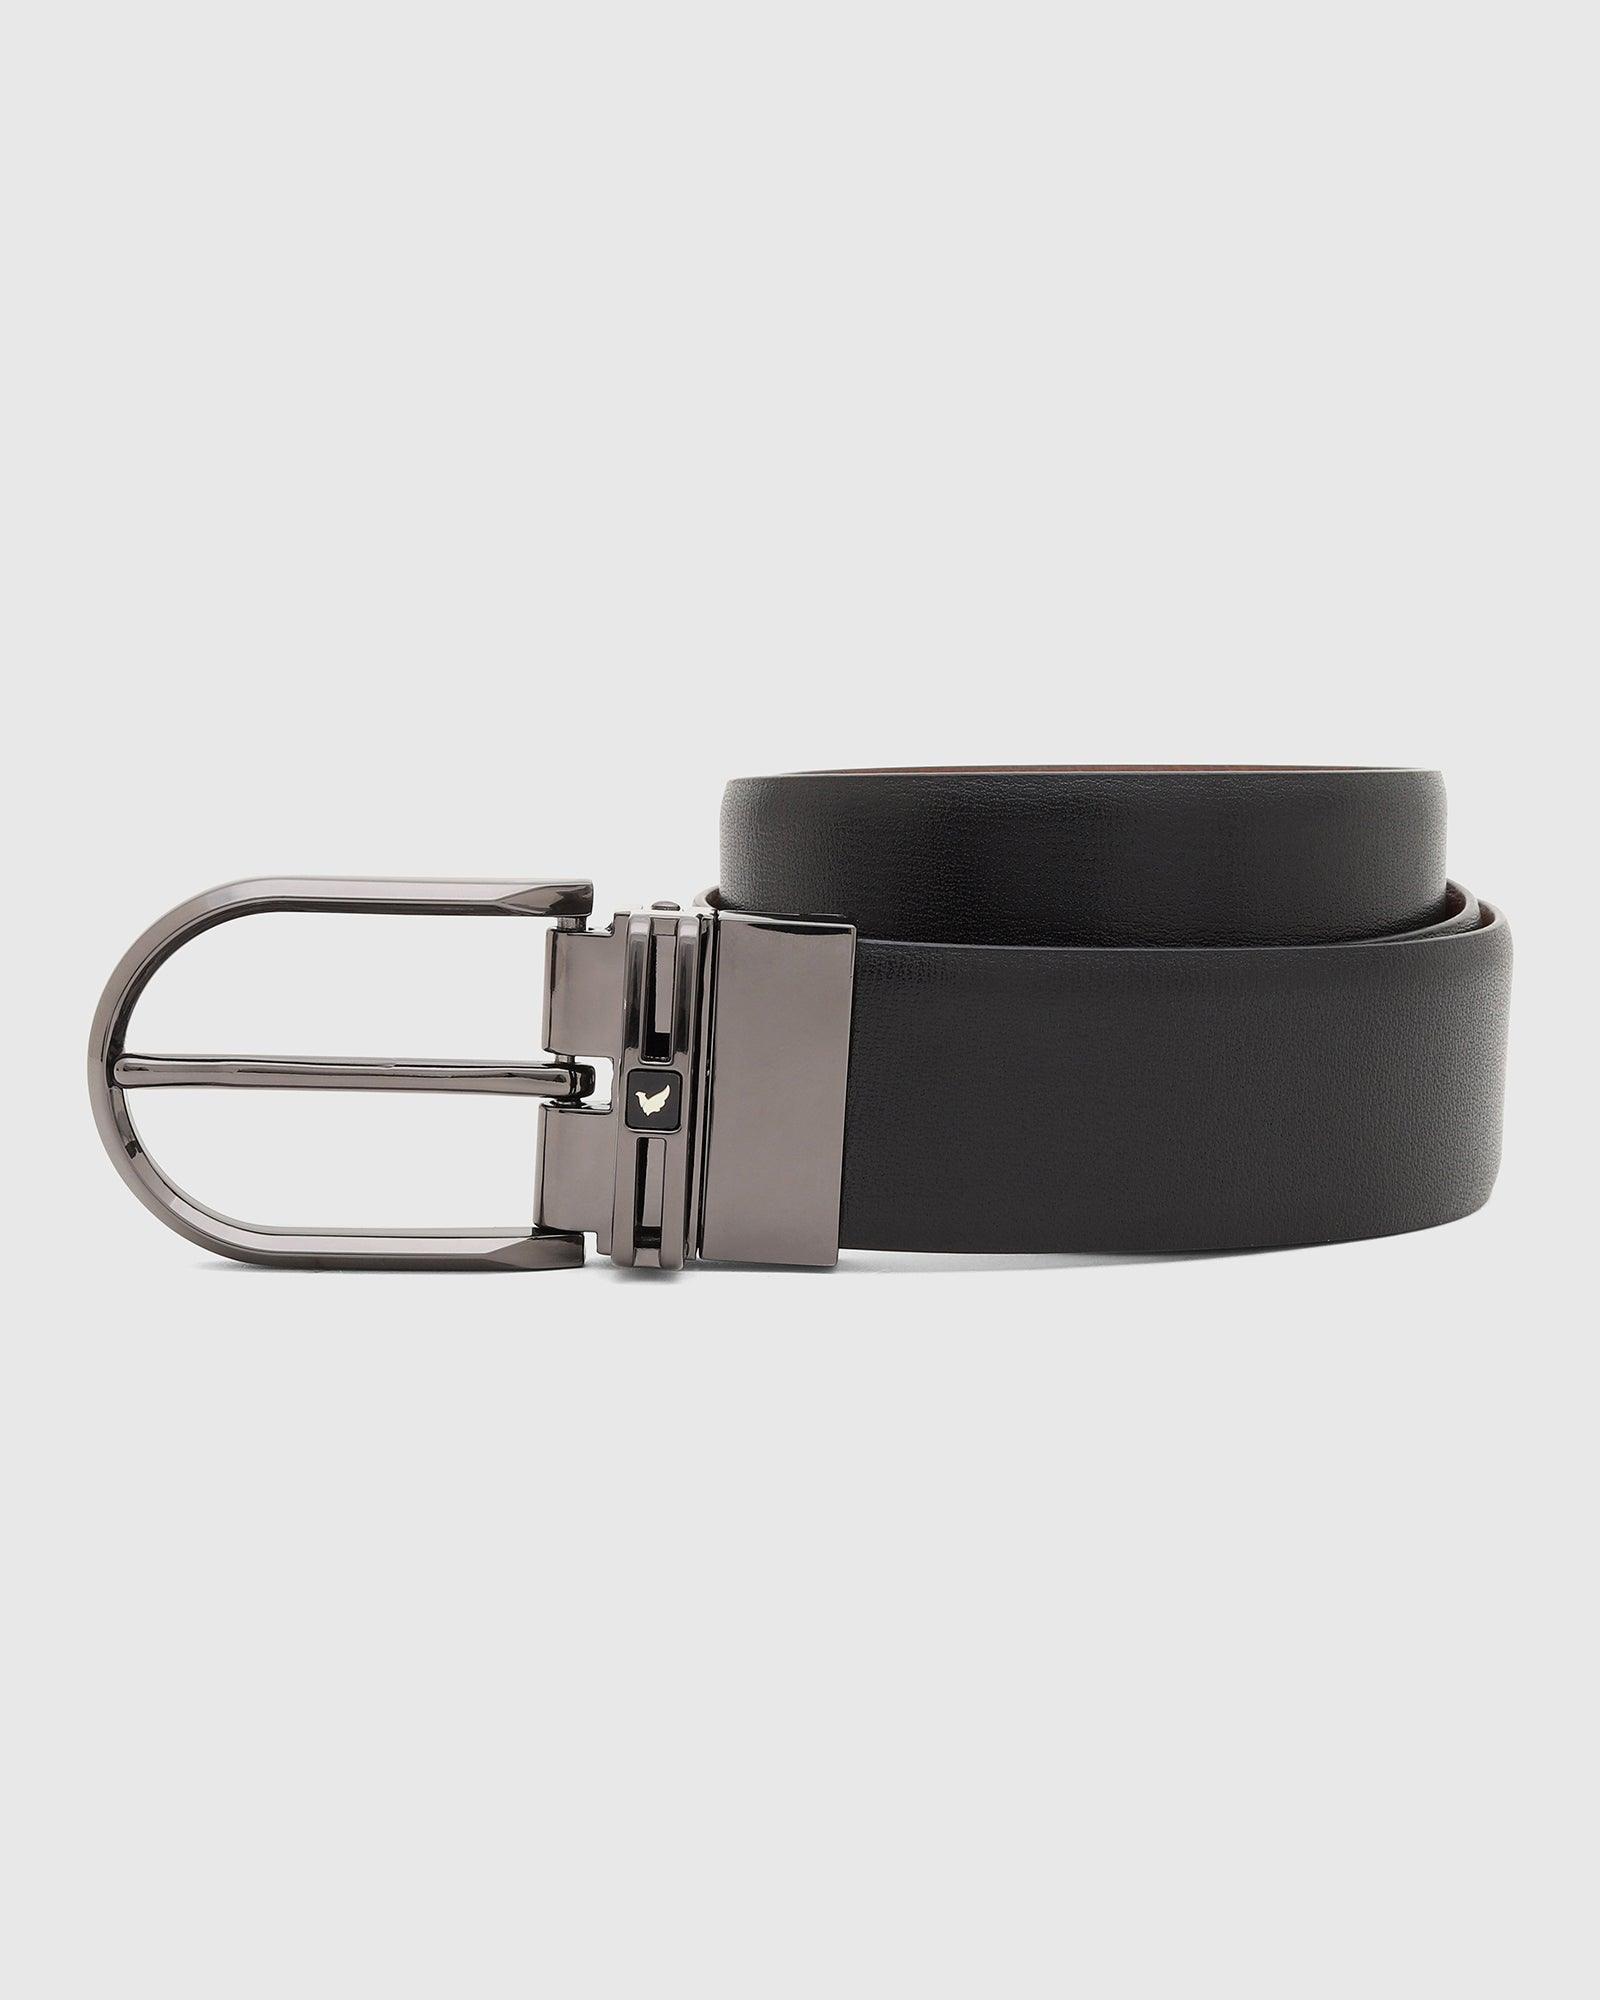 leather-reversible-black-tan-solid-belt---sofian